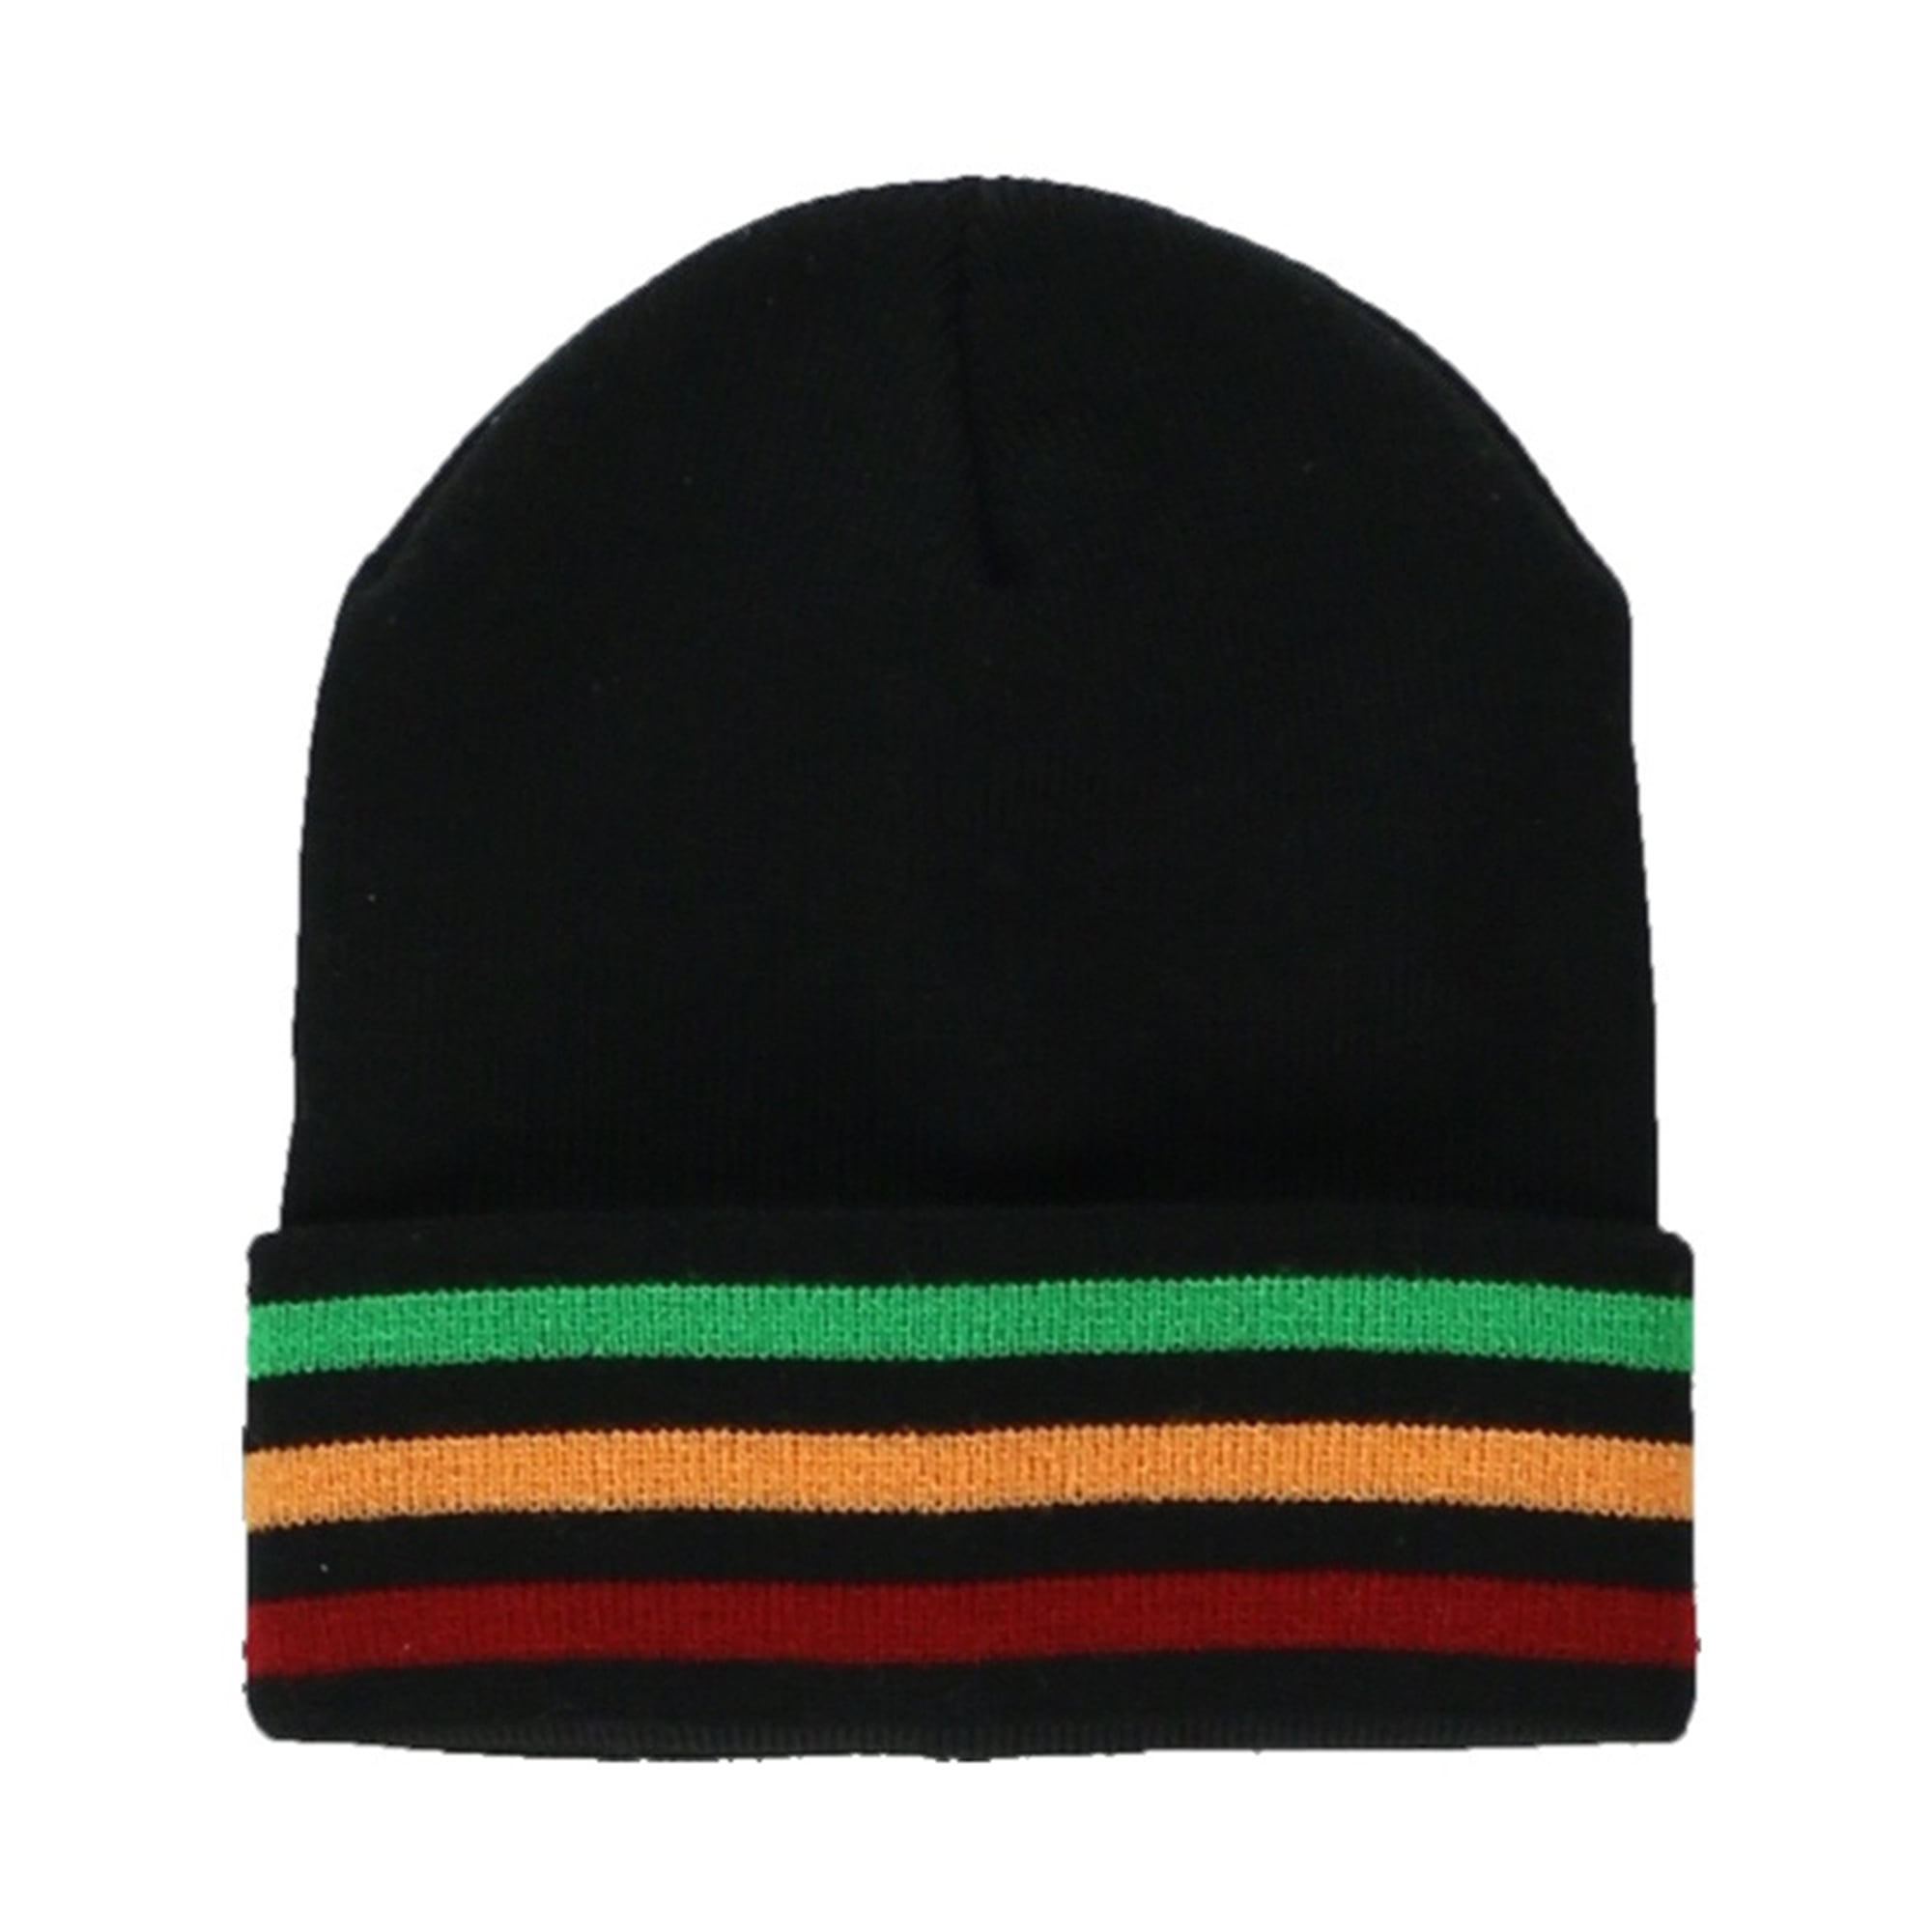 Ecko Unltd. - Ecko Unltd. Mens Dub Stripe Beanie Hat, Black, One Size ...